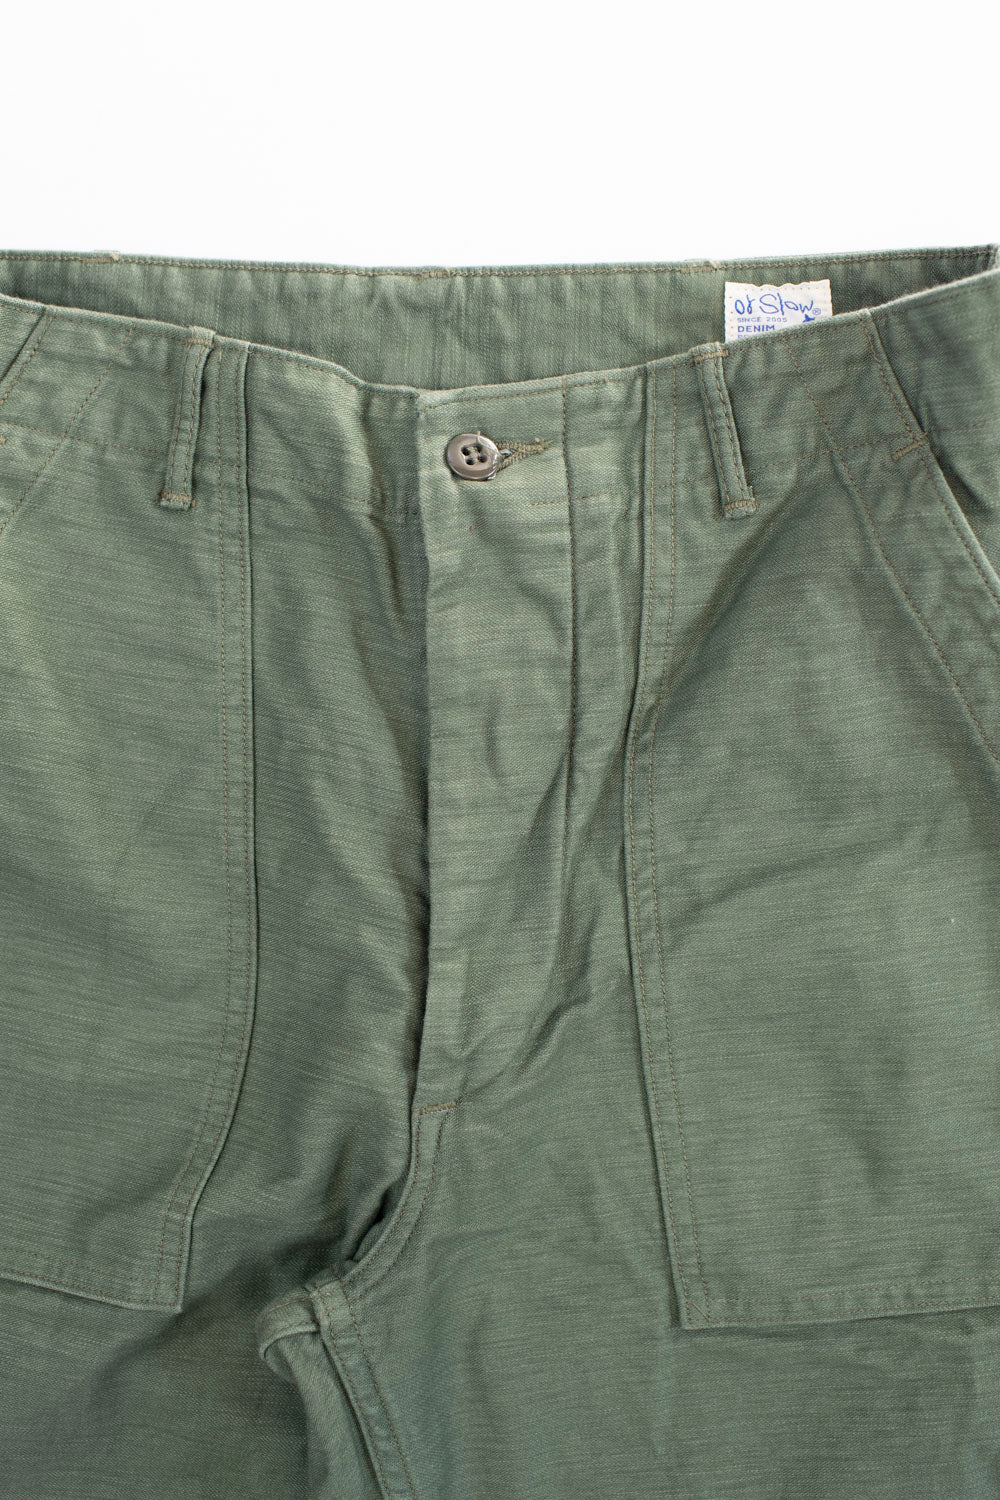 01-5002-16 - Fatigue Pants Reverse Sateen - Standard Fit - Olive